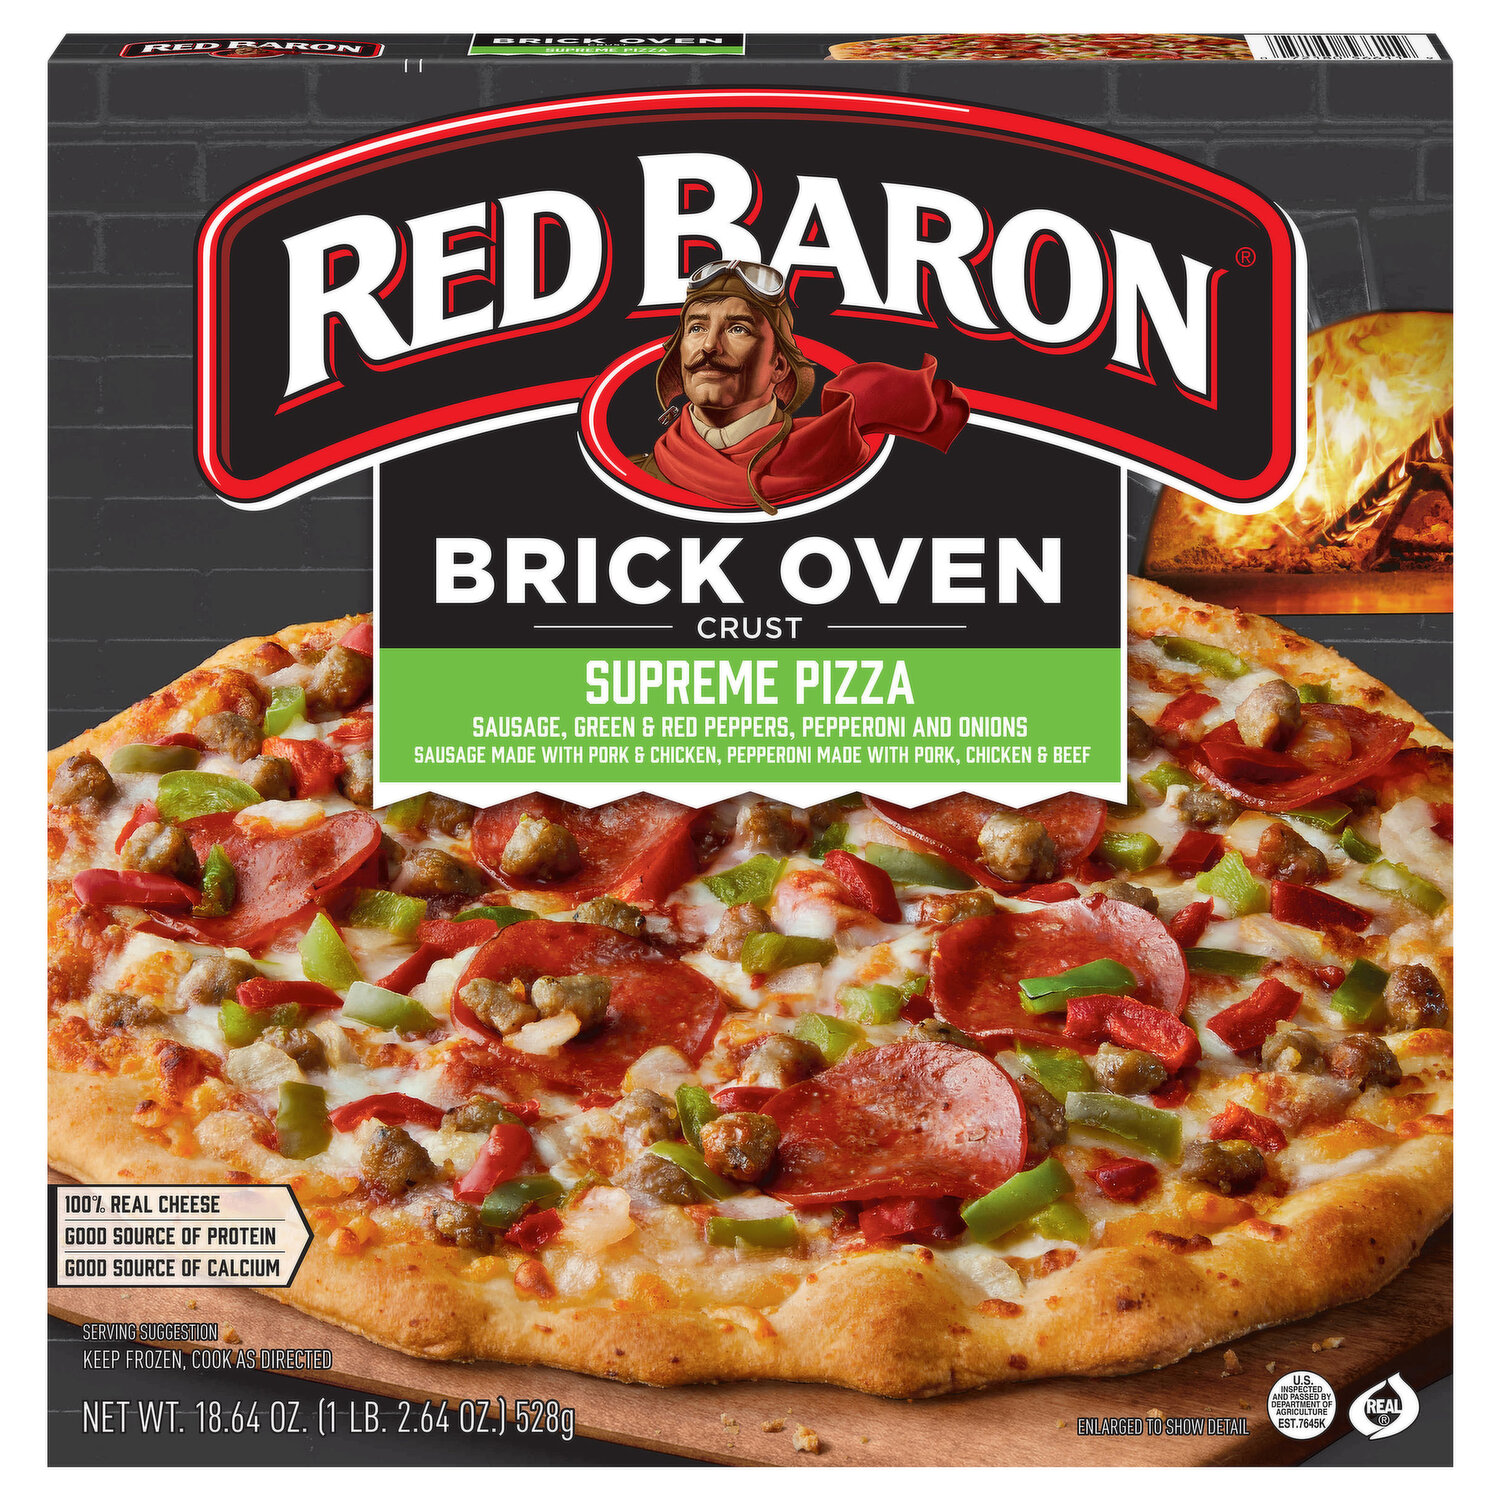 Red Baron Pizzas, Pepperoni, Deep Dish Singles